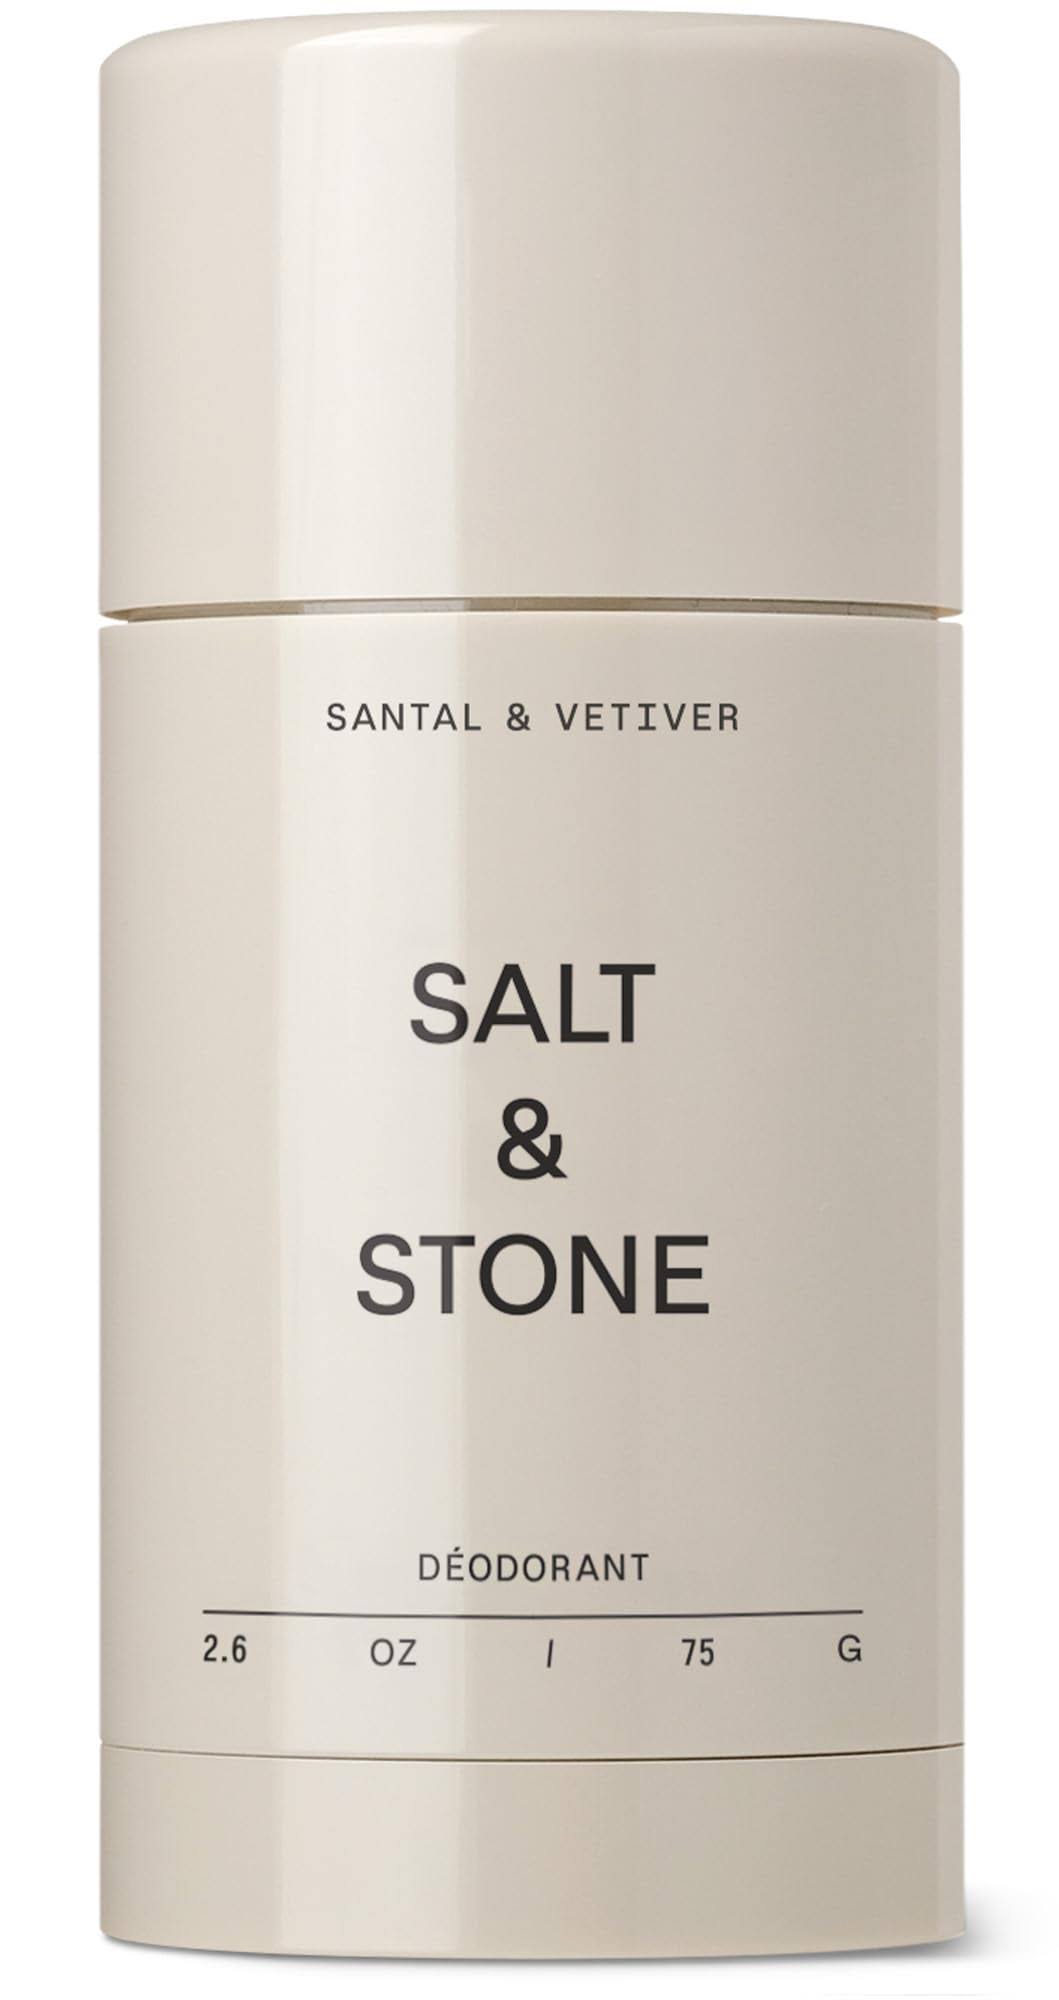 Salt & Stone Natural Deodorant Santal